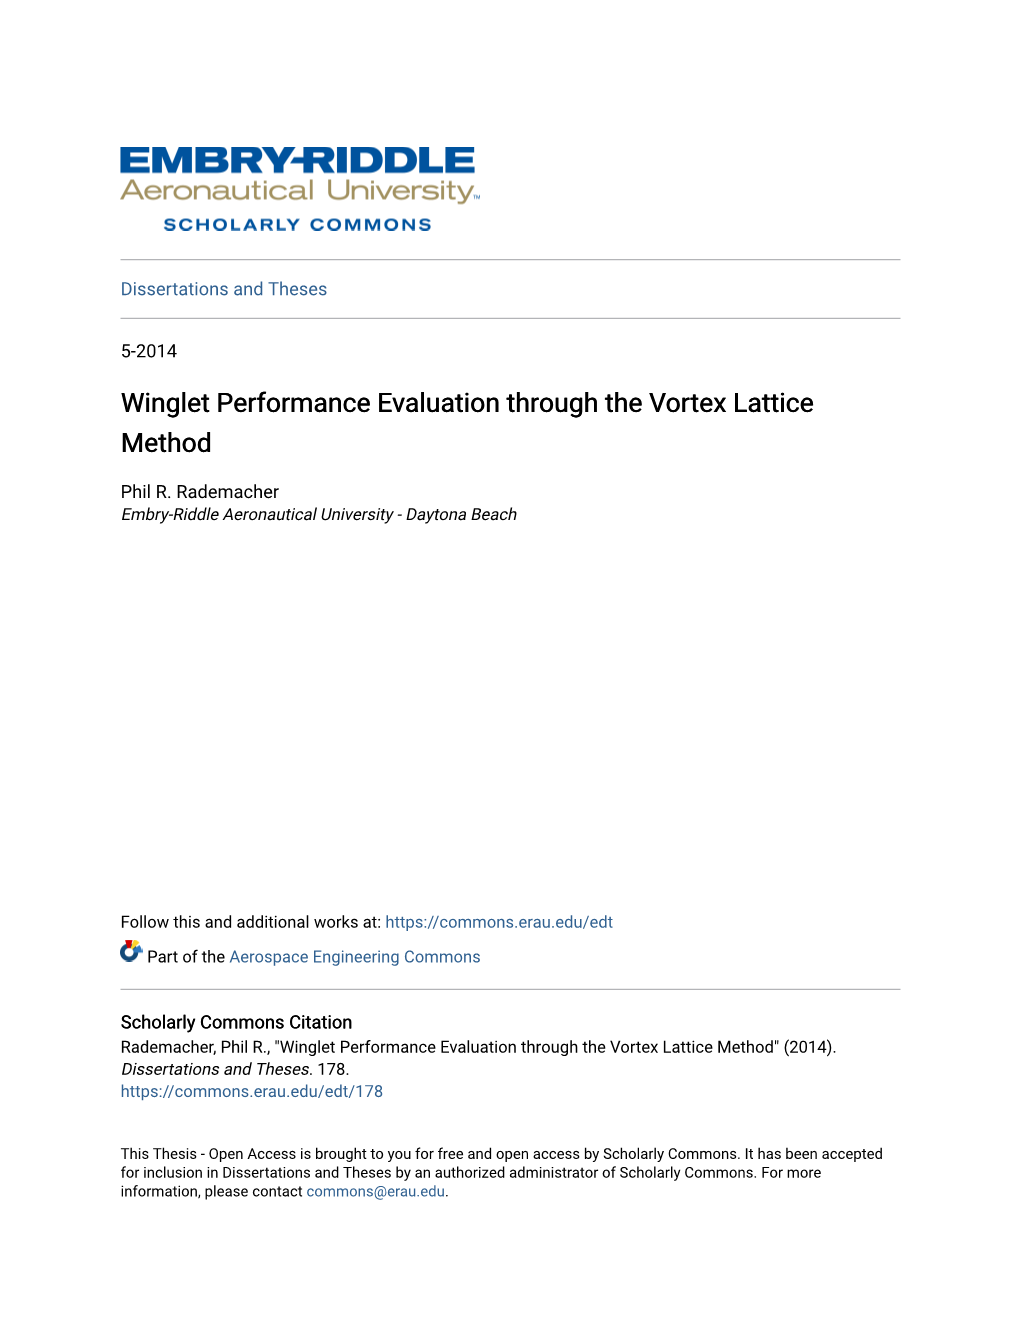 Winglet Performance Evaluation Through the Vortex Lattice Method